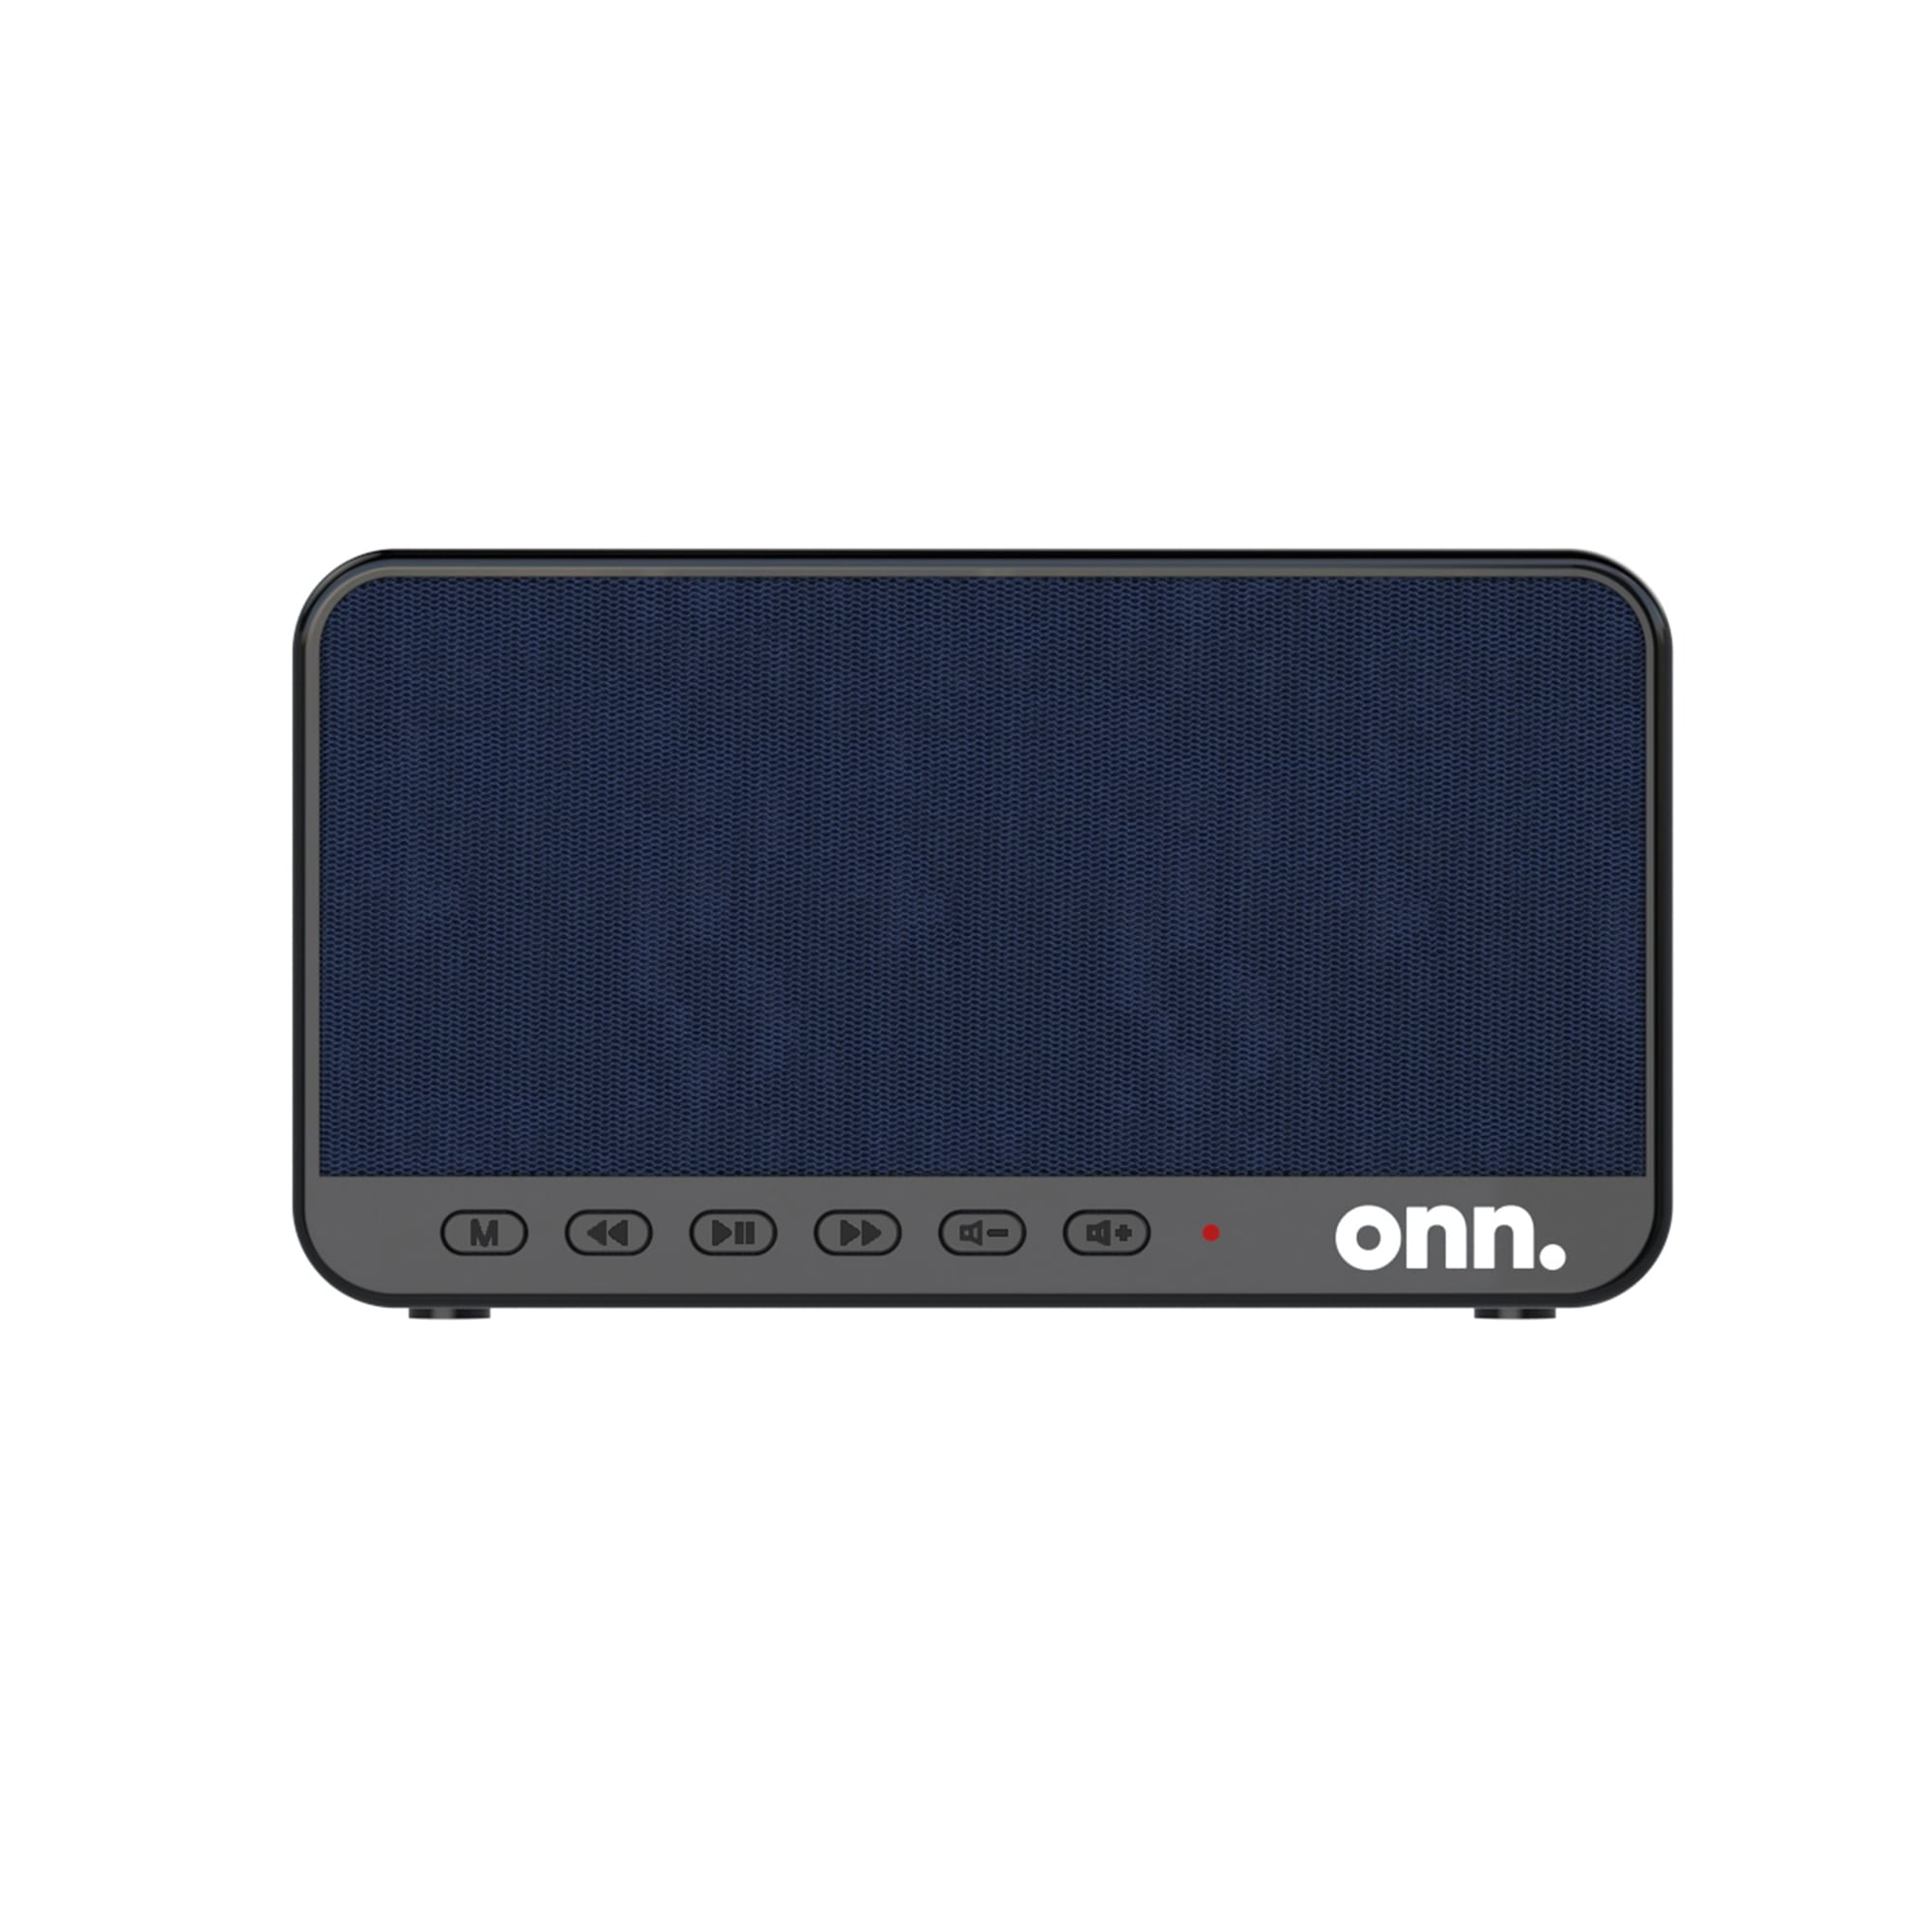 onn. Wireless Portable Bluetooth Boombox with Digital FM Radio